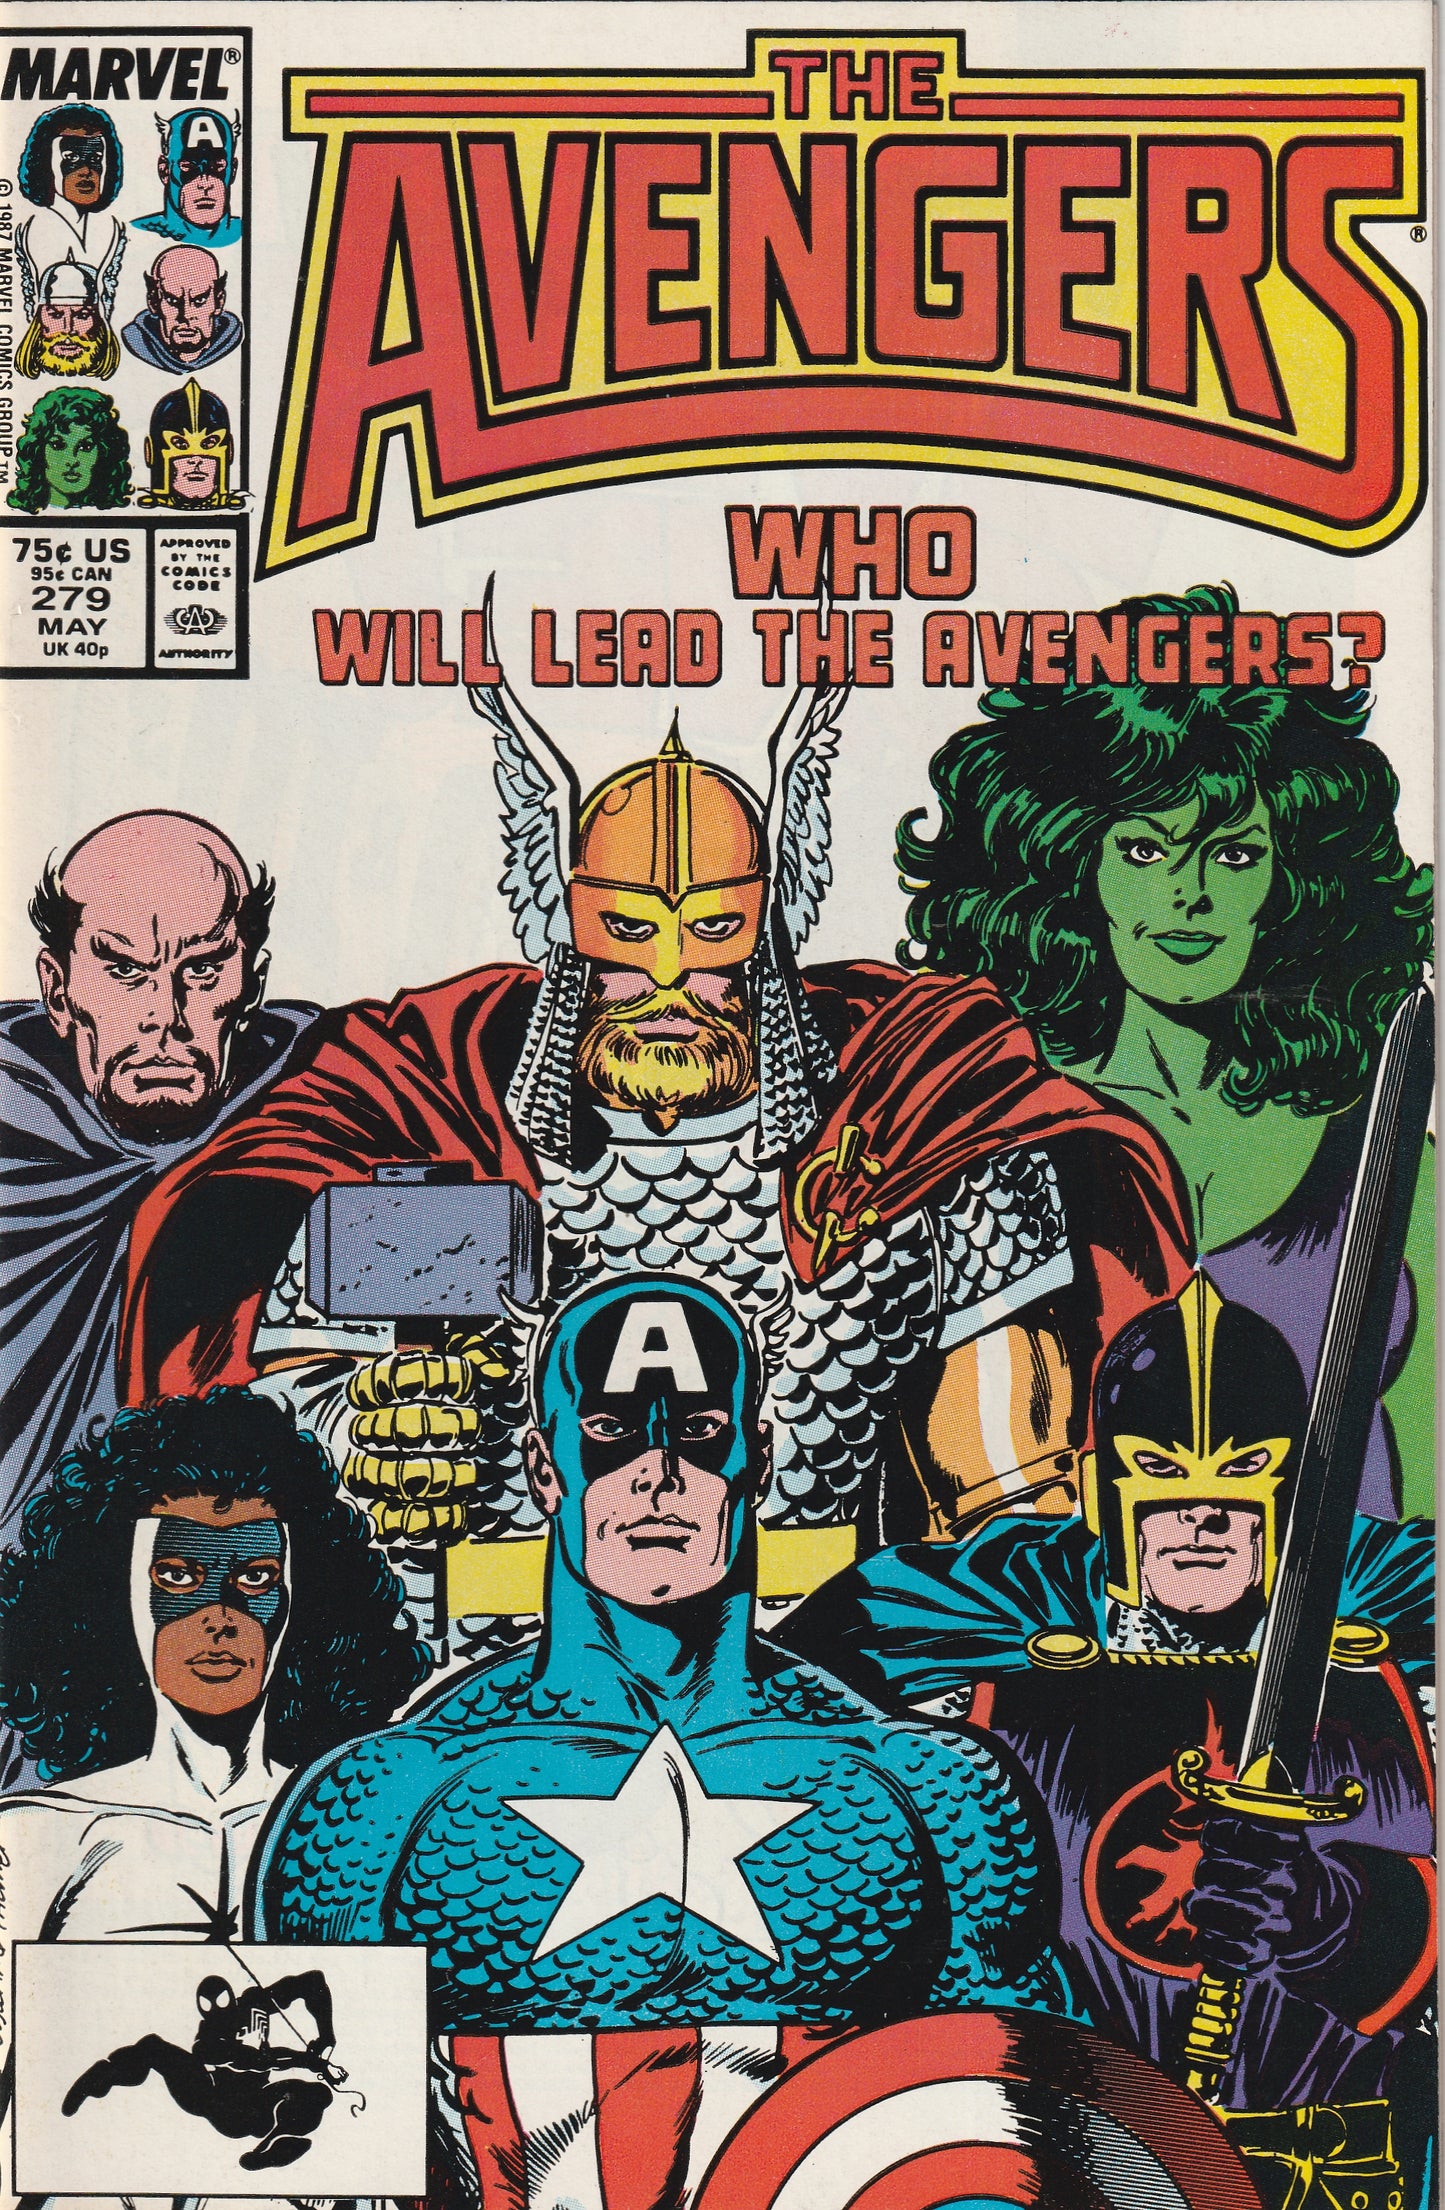 Avengers #279 (1987) - Captain Marvel (Monica Rambeau) becomes Chairman of the Avengers